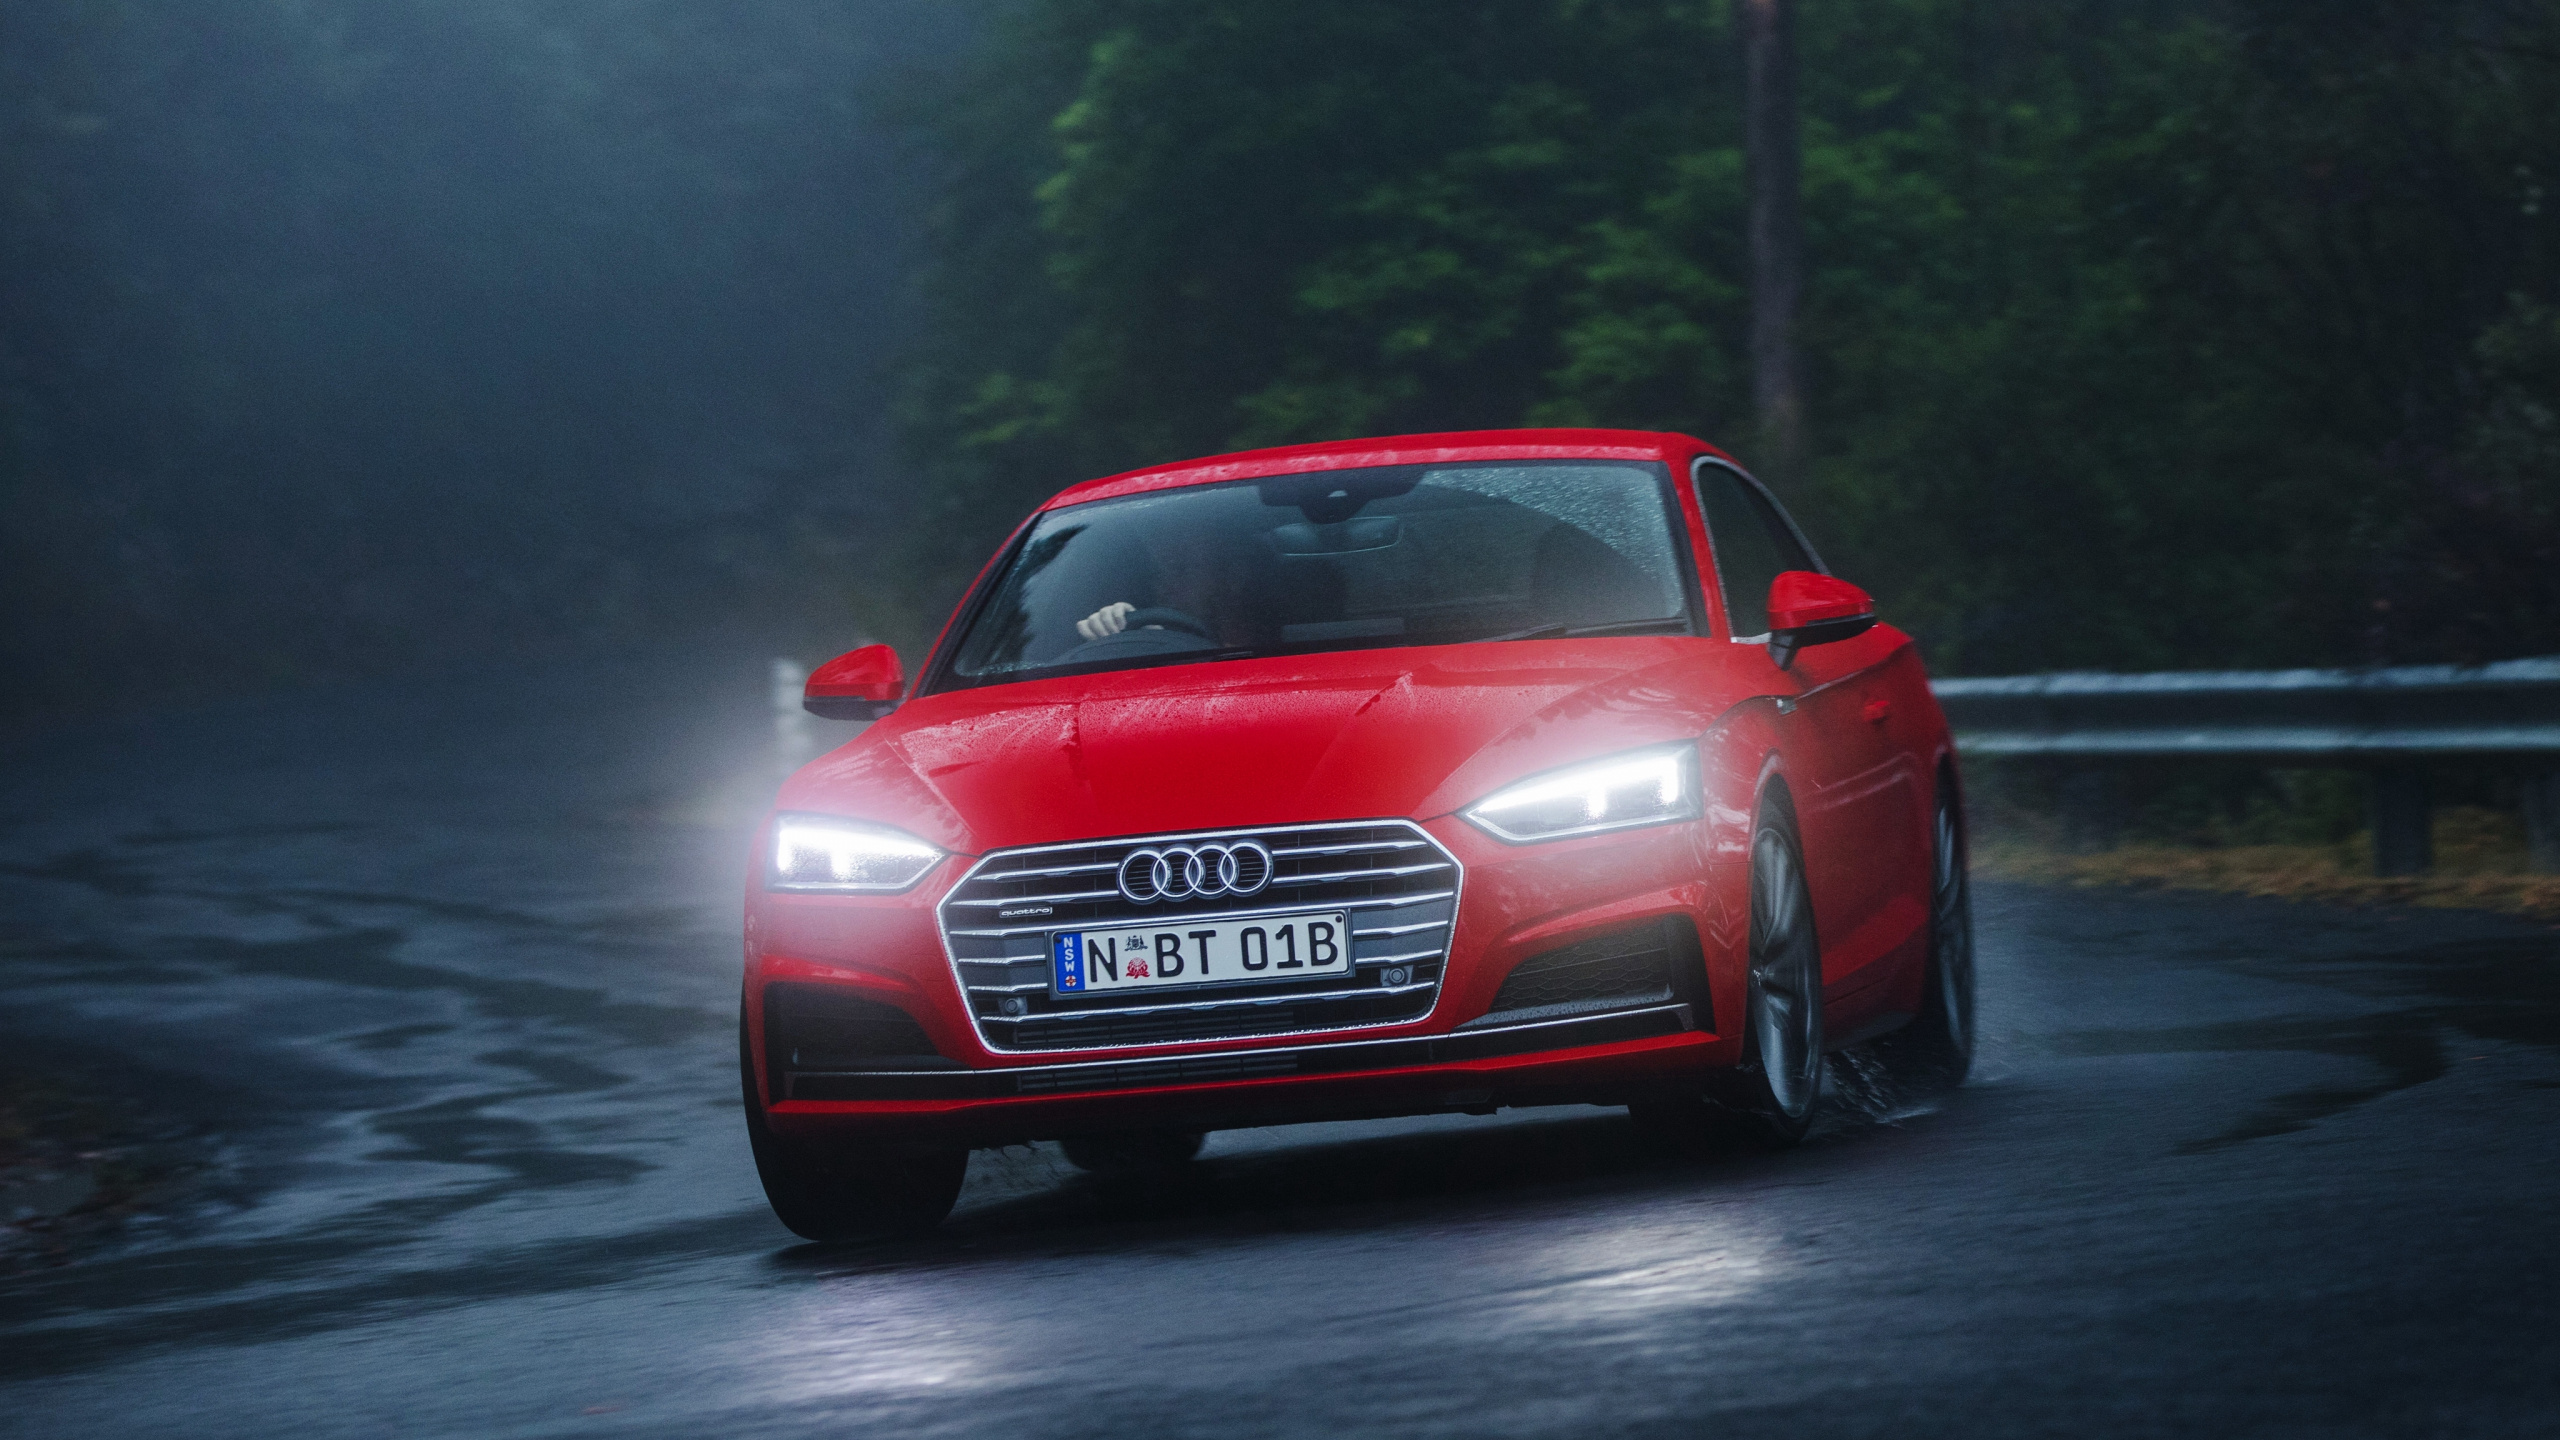 Roter Audi a 4 Unterwegs. Wallpaper in 2560x1440 Resolution